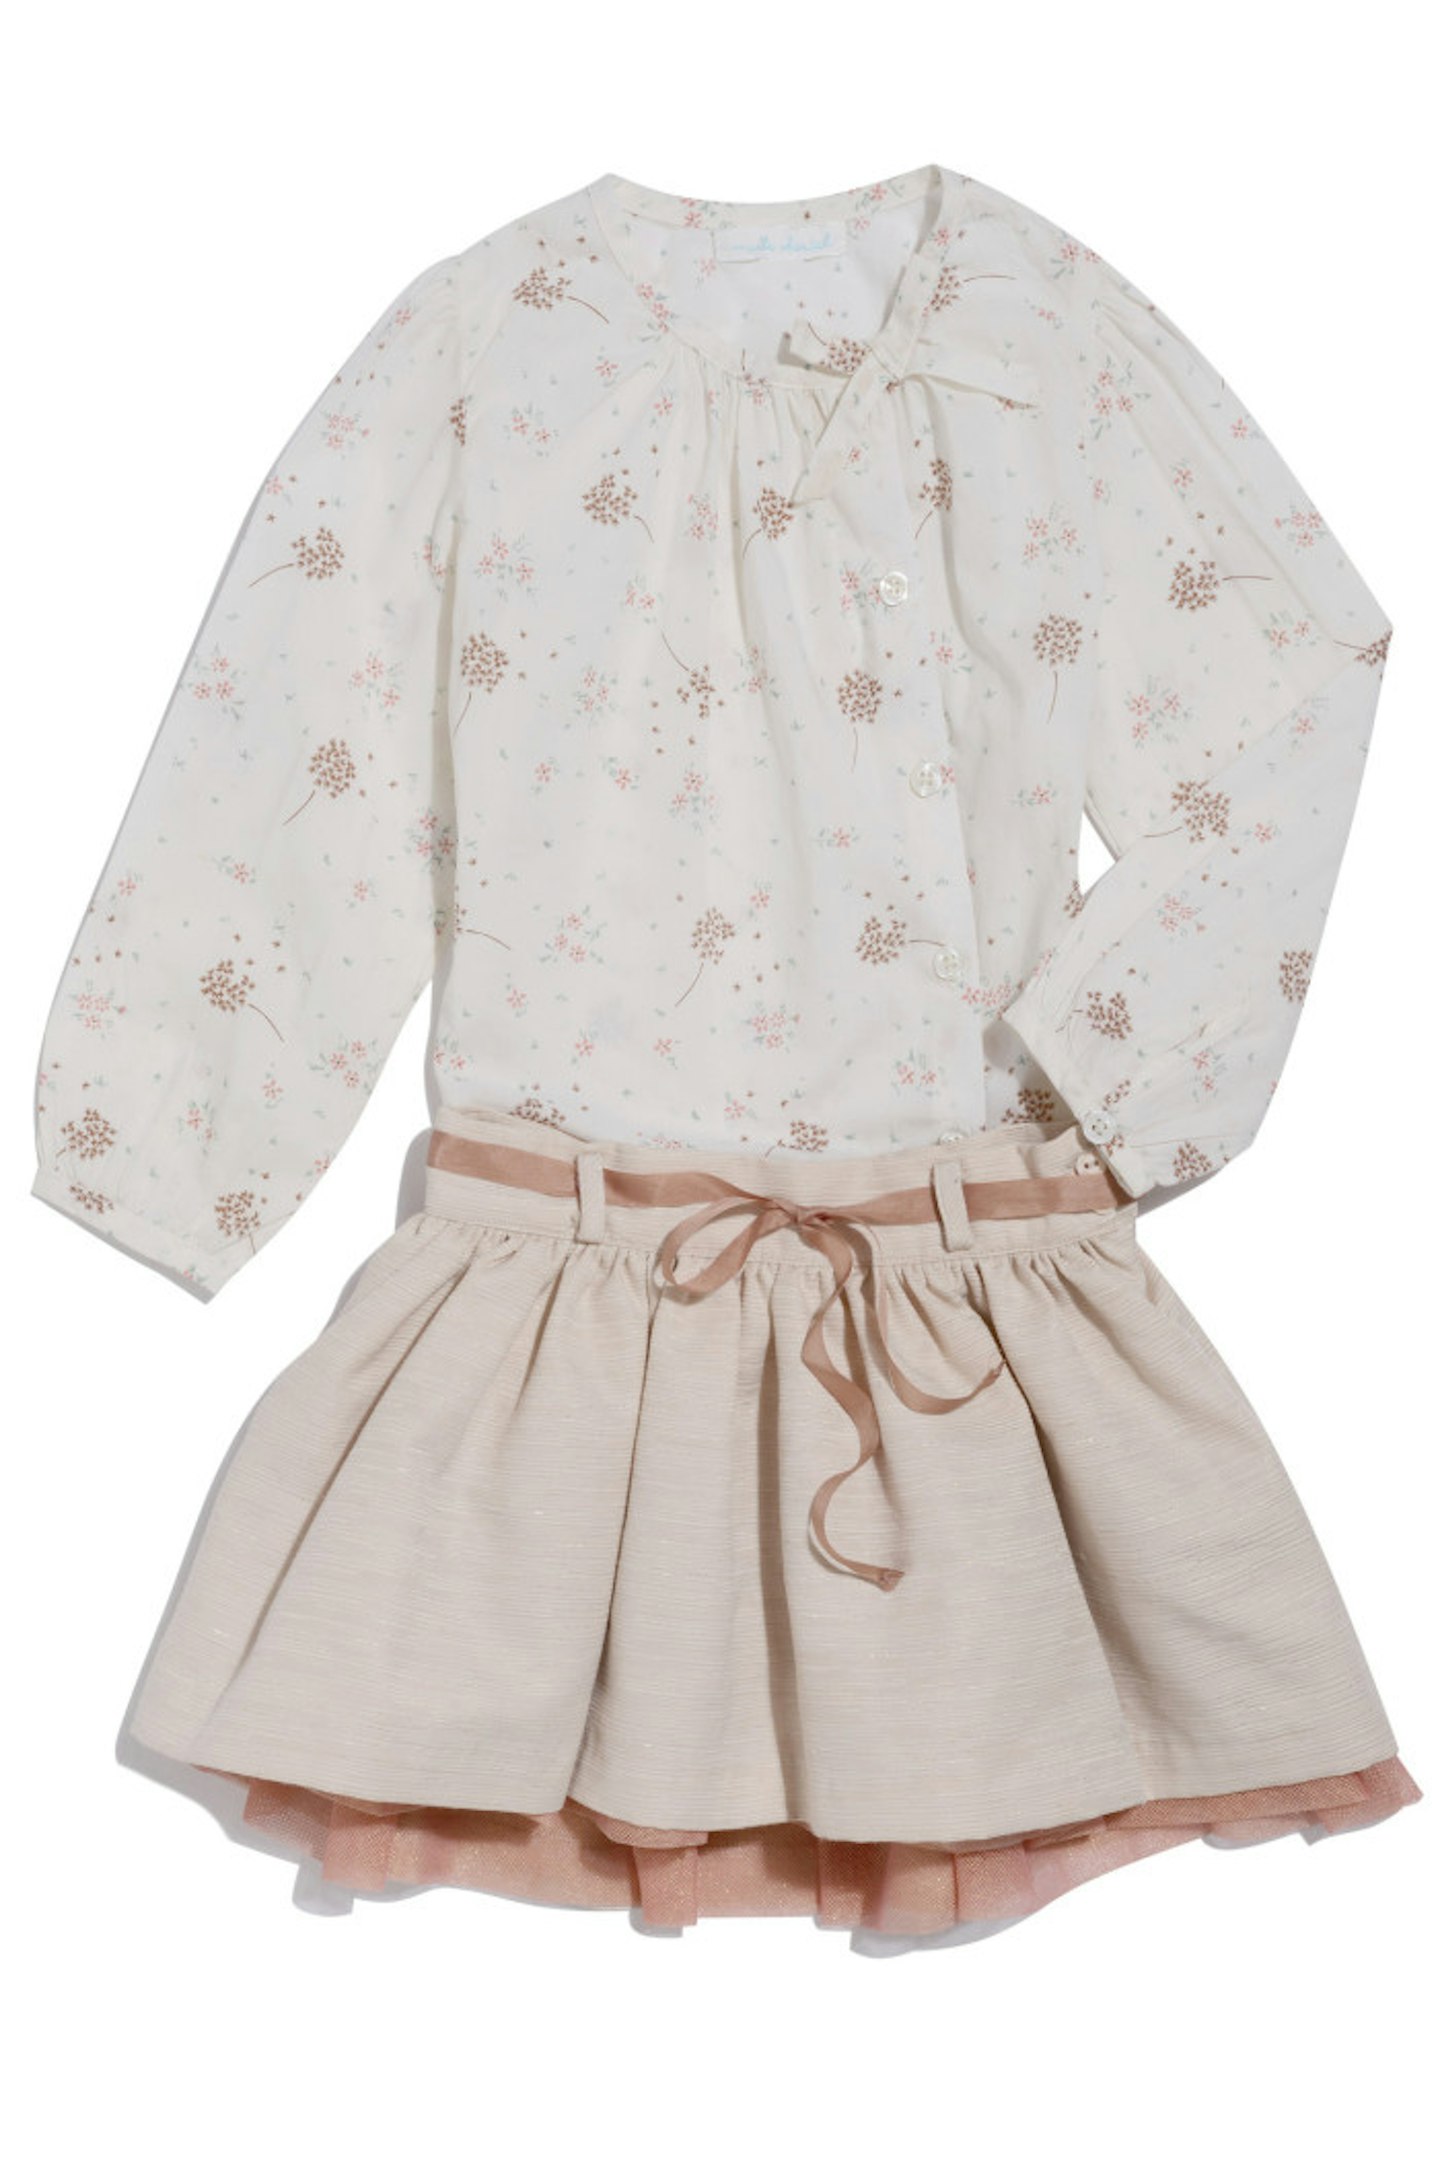 Marie Chantal cream/pink net skirt skirt with Marie Chantal dandelion print blouse and Chloe cream scallop edge shirt